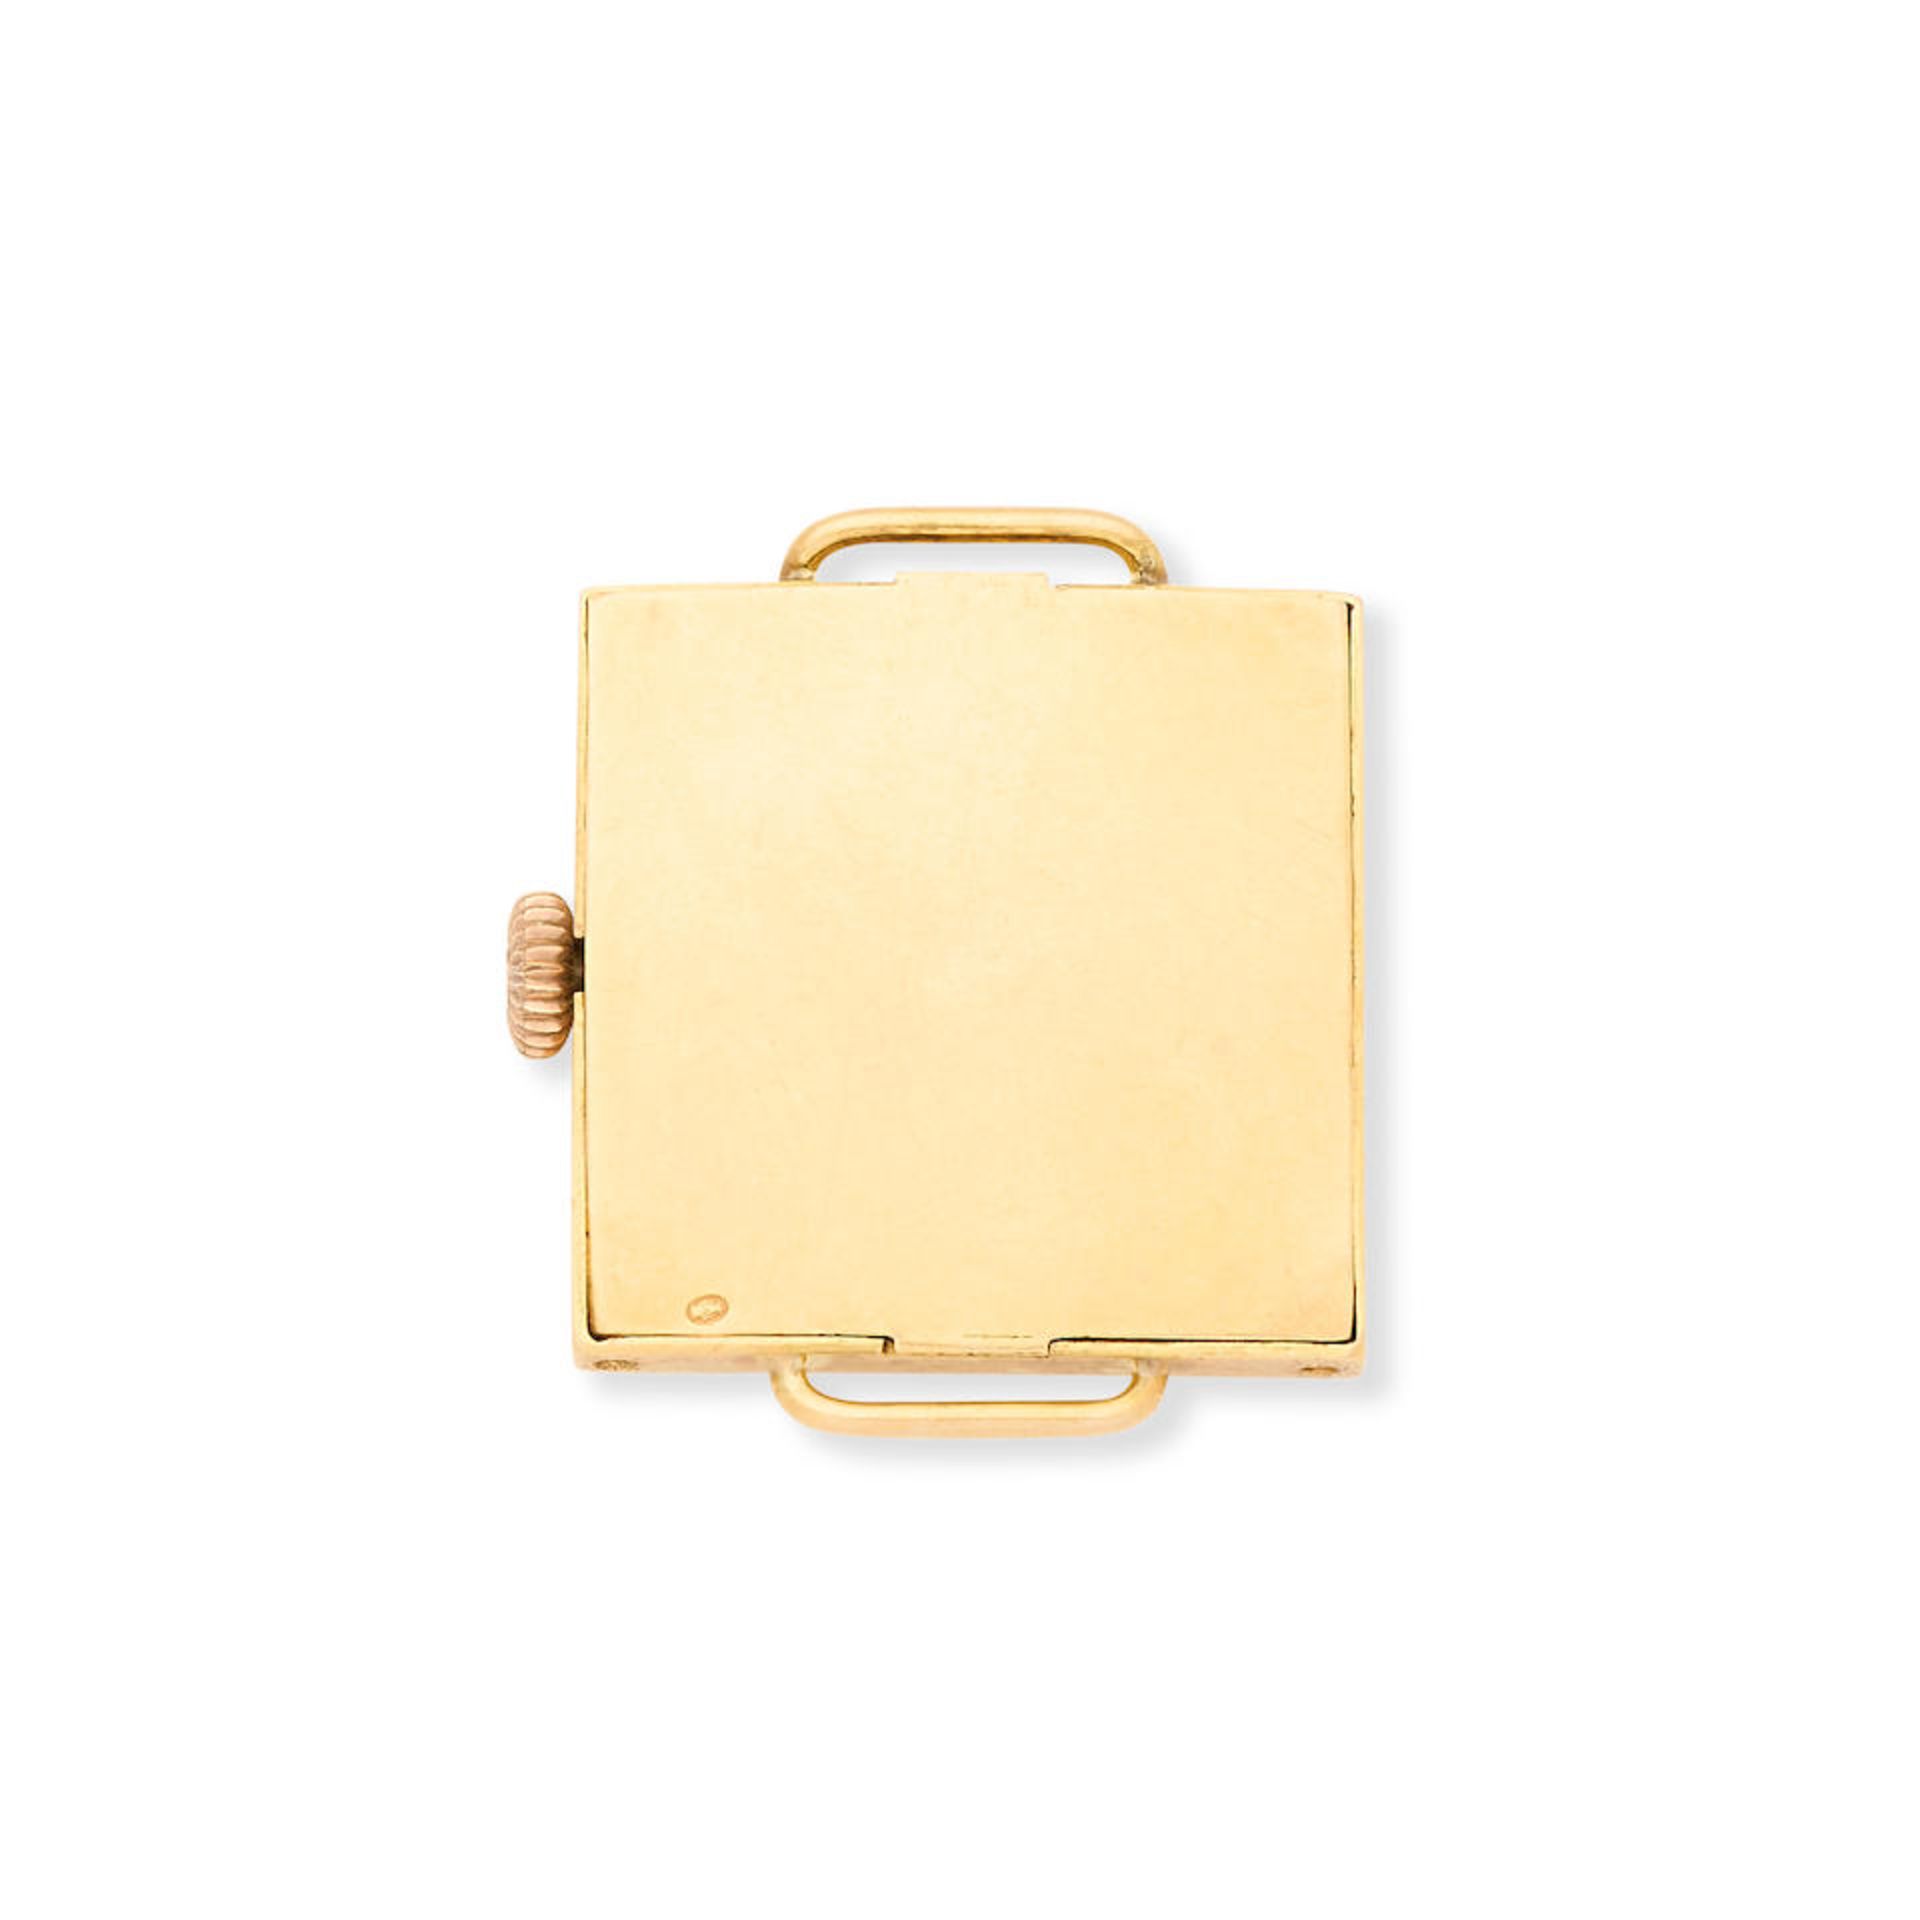 An 18K gold and enamel diamond set wristwatch Circa 1920 - Image 2 of 2